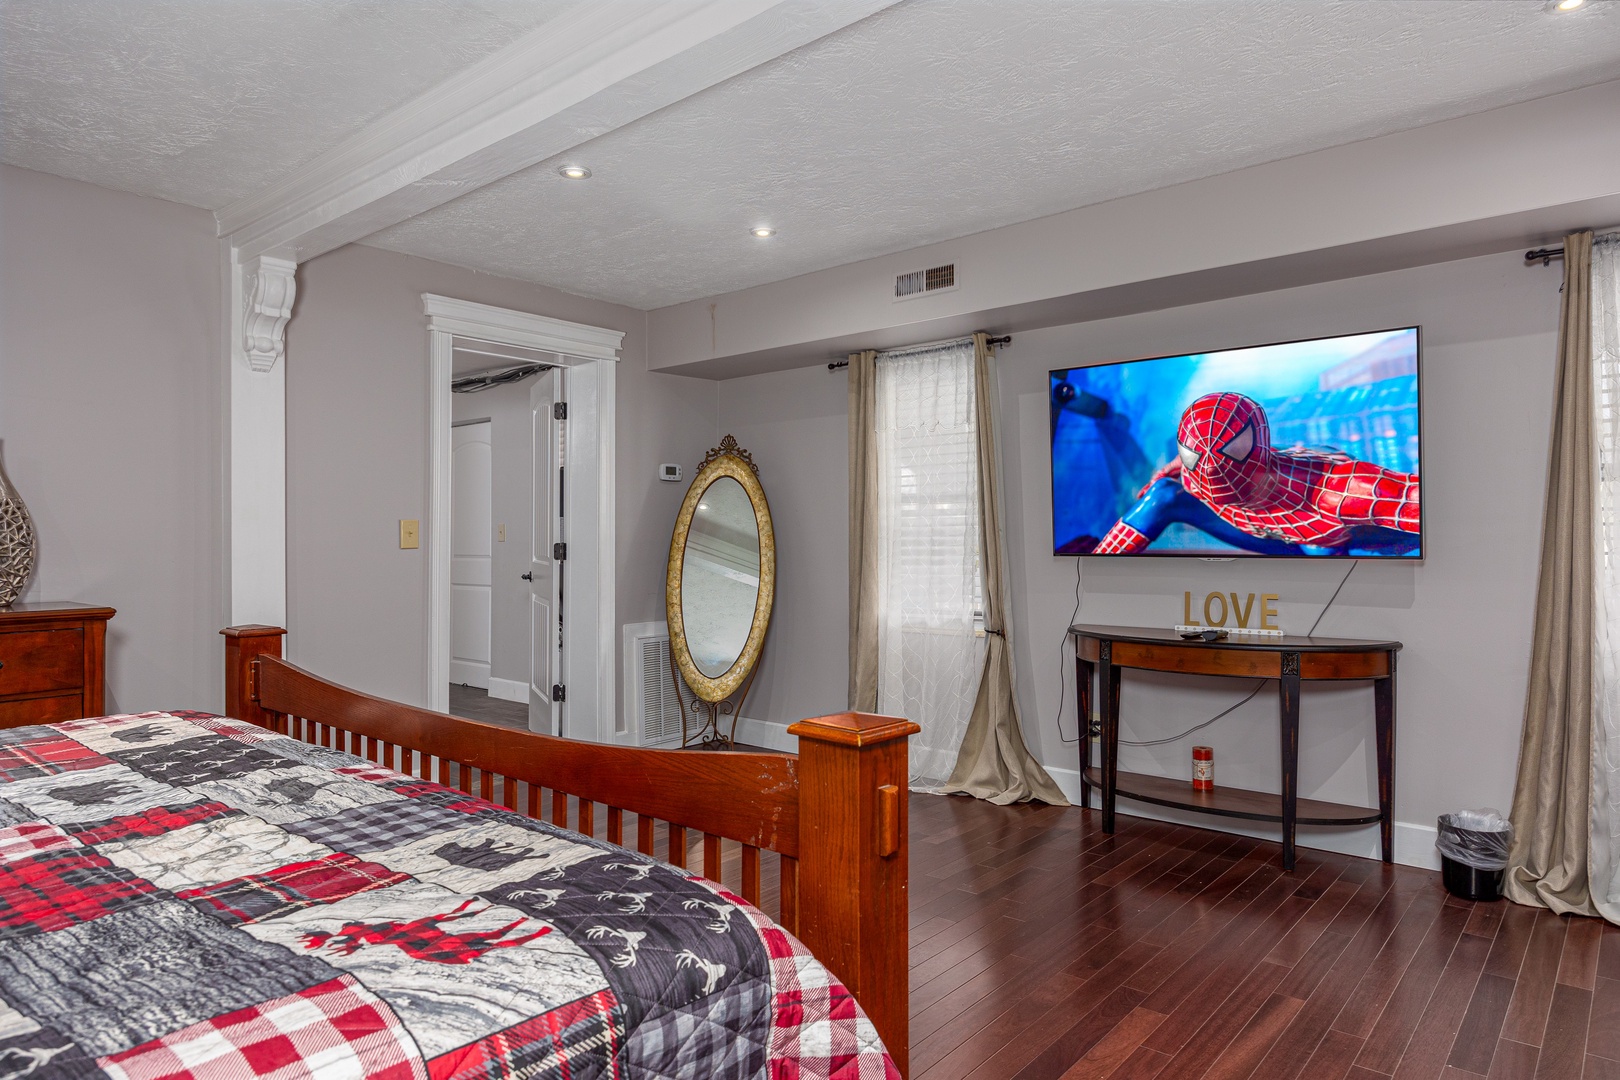 Master bedroom Flat Screen Tv at Hoop Dreams Lodge